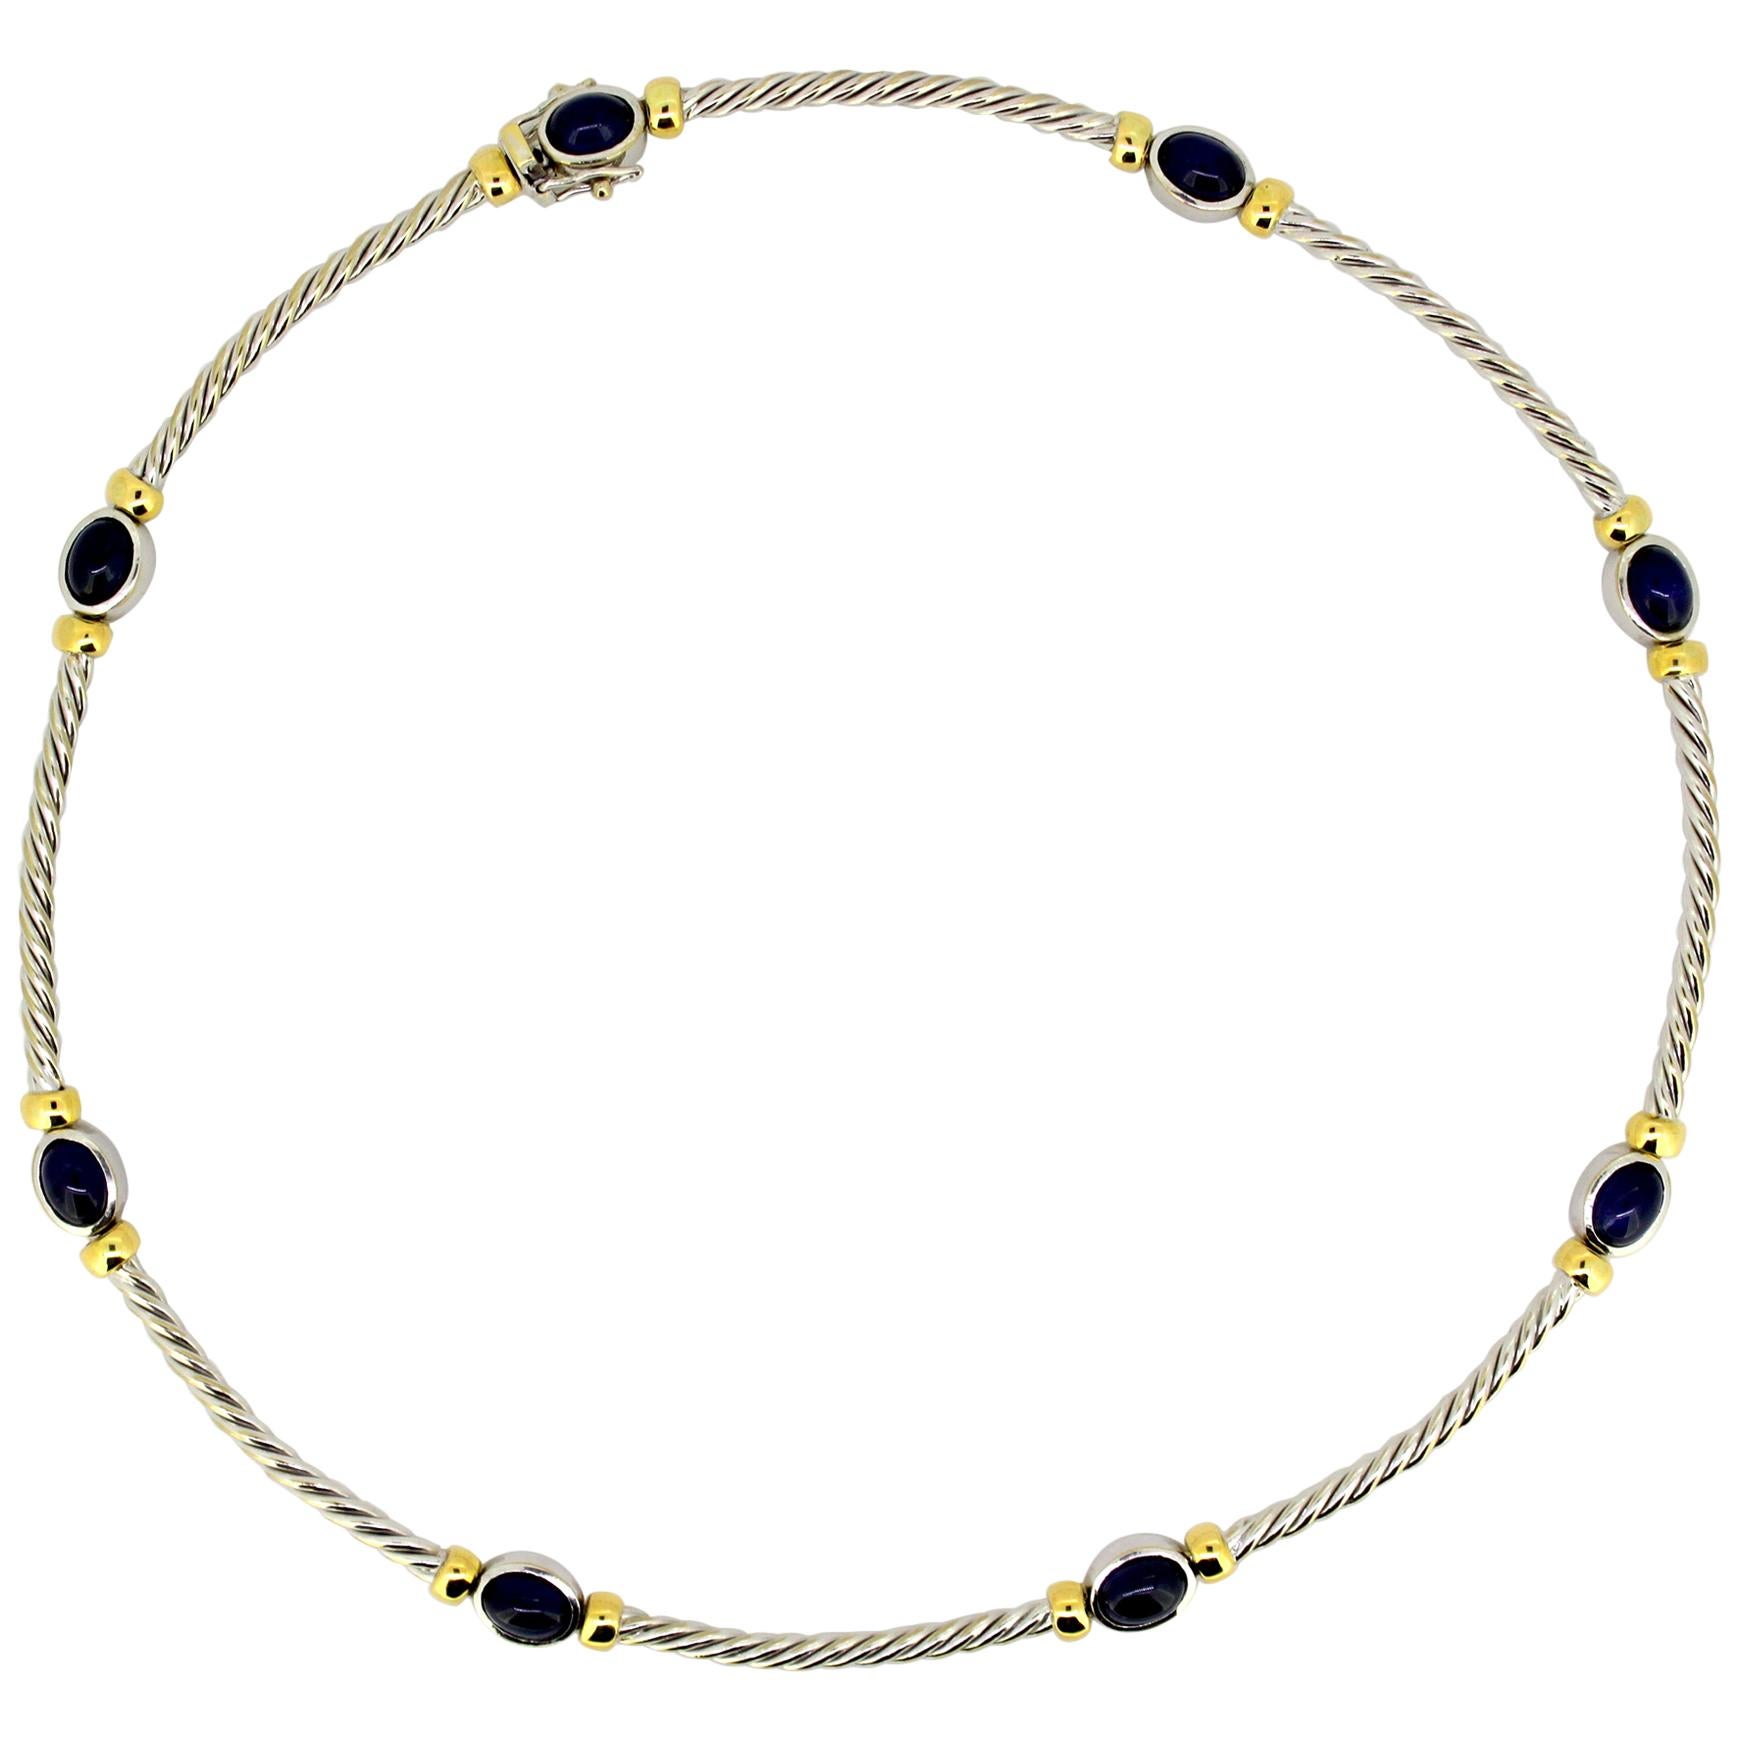 Vintage 18 Karat White Gold Ladies Necklace with Cabochon Blue Sapphires